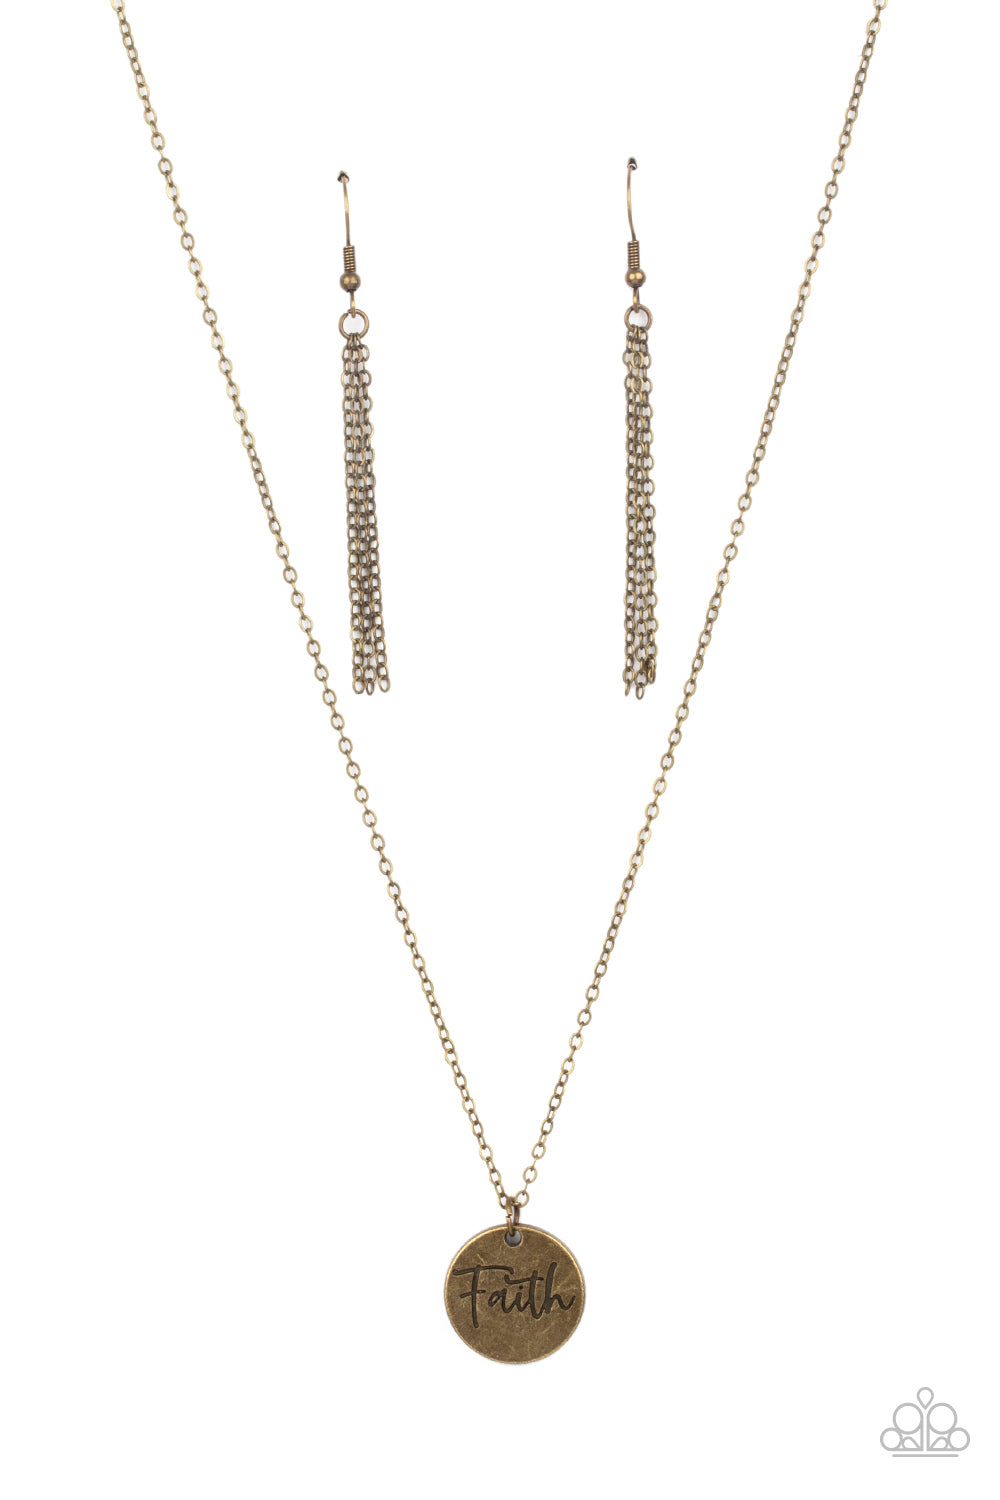 Choose Faith Necklace (Brass, Silver, Copper)